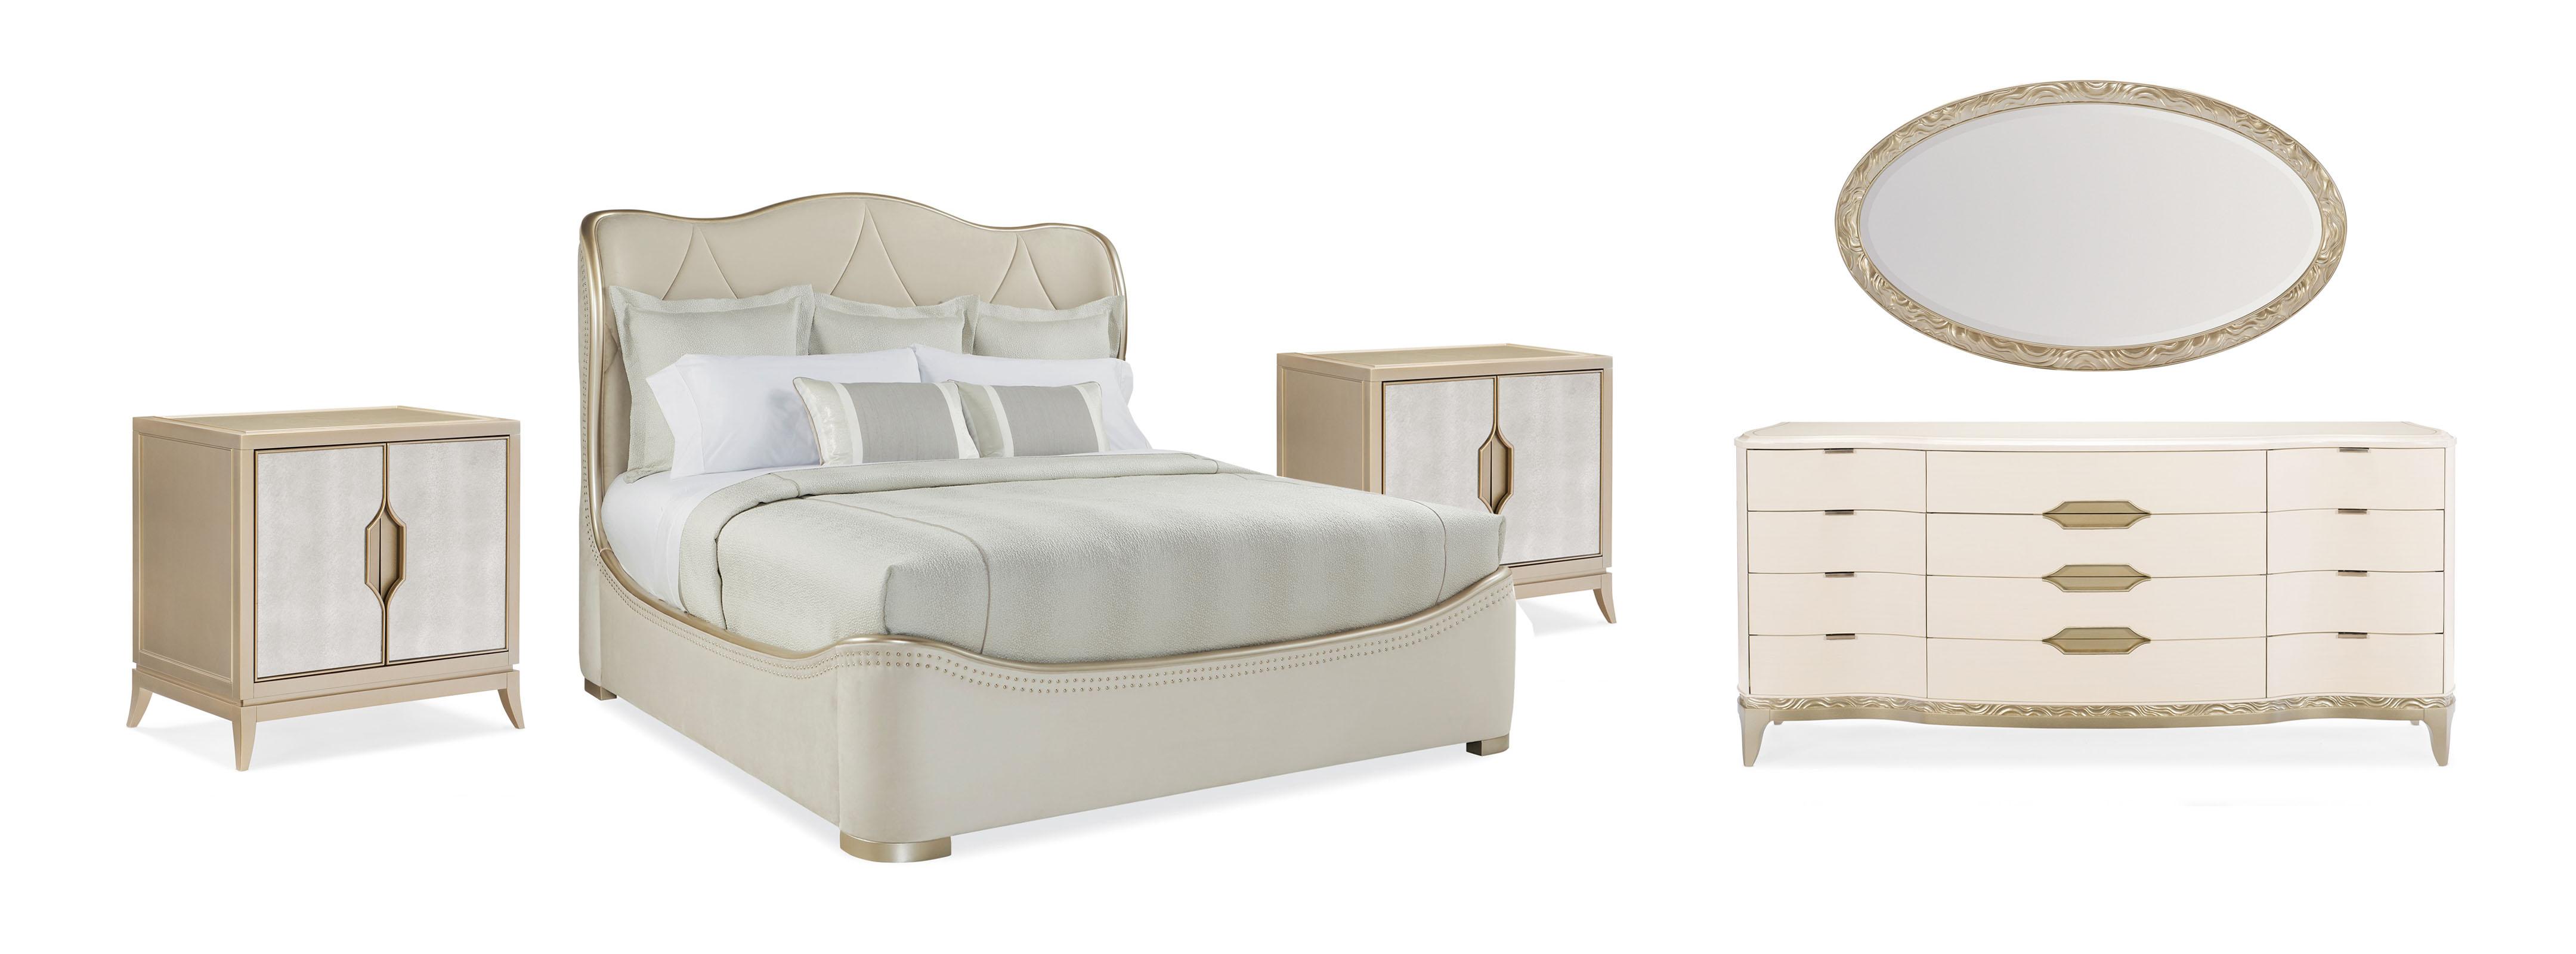 Contemporary Sleigh Bedroom Set ADELA QUEEN BED / ADELA NIGHTSTAND / ADELA DRESSER / ADELA MIRROR C013-016-102-Set-5 in Cream Velvet